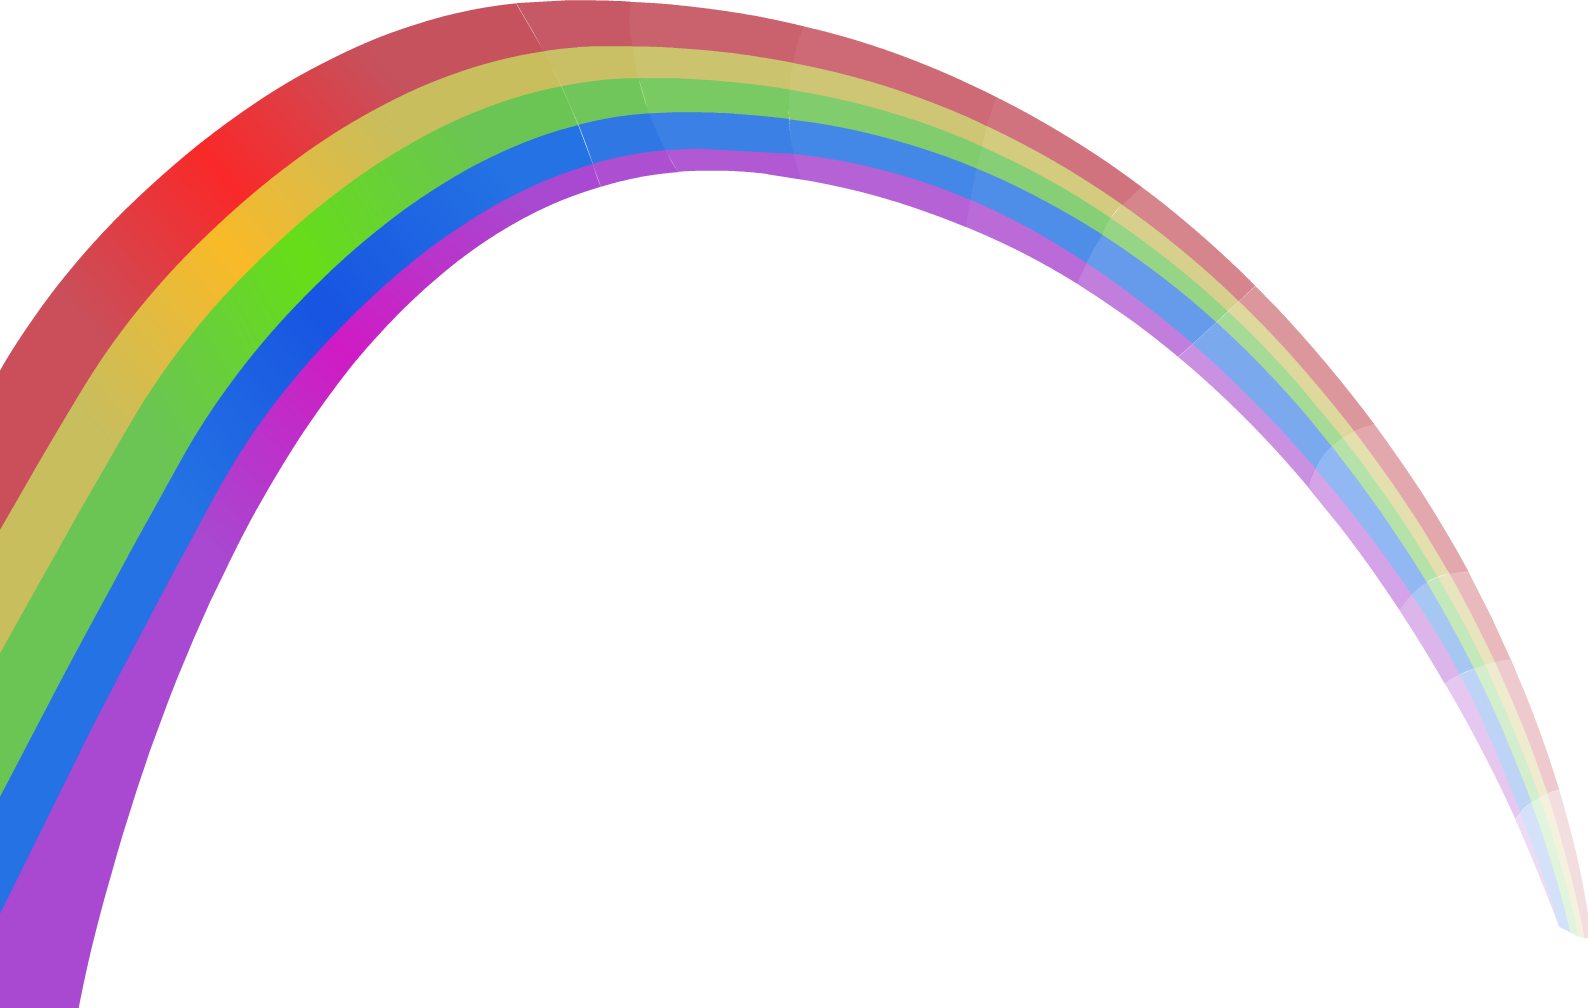 Rainbow PNG HD Quality